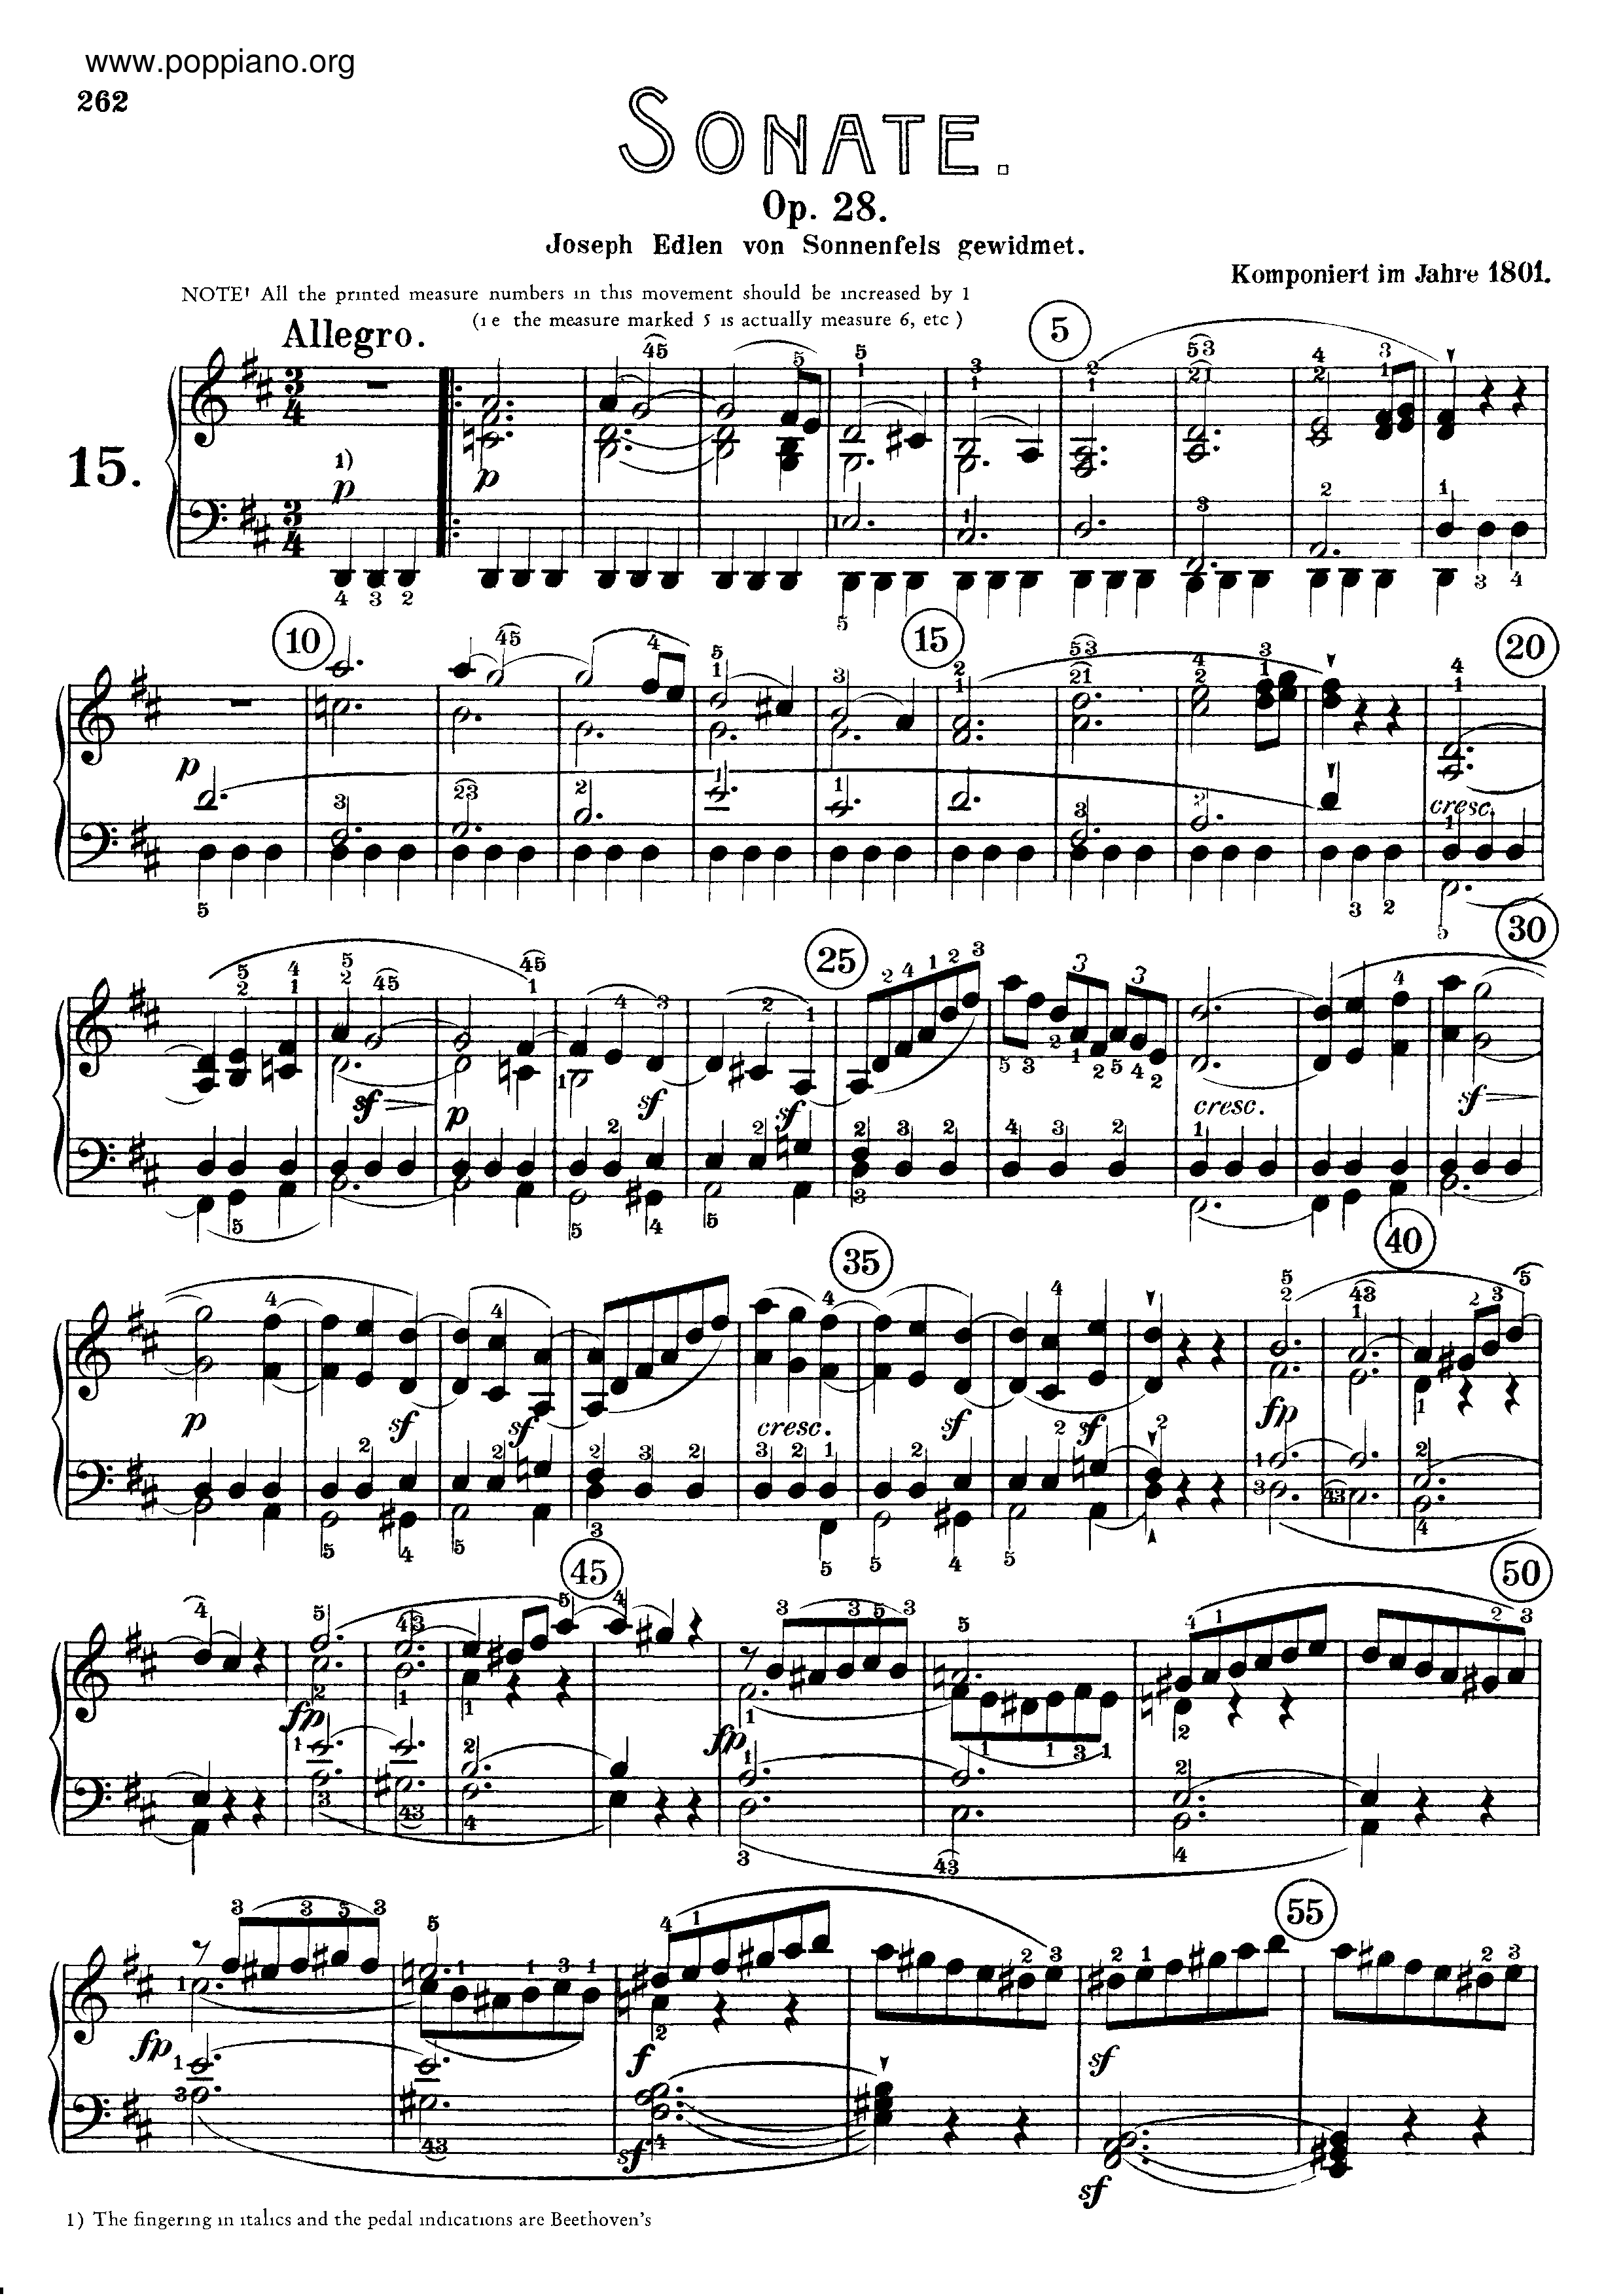 Sonata No. 15 in D major琴谱